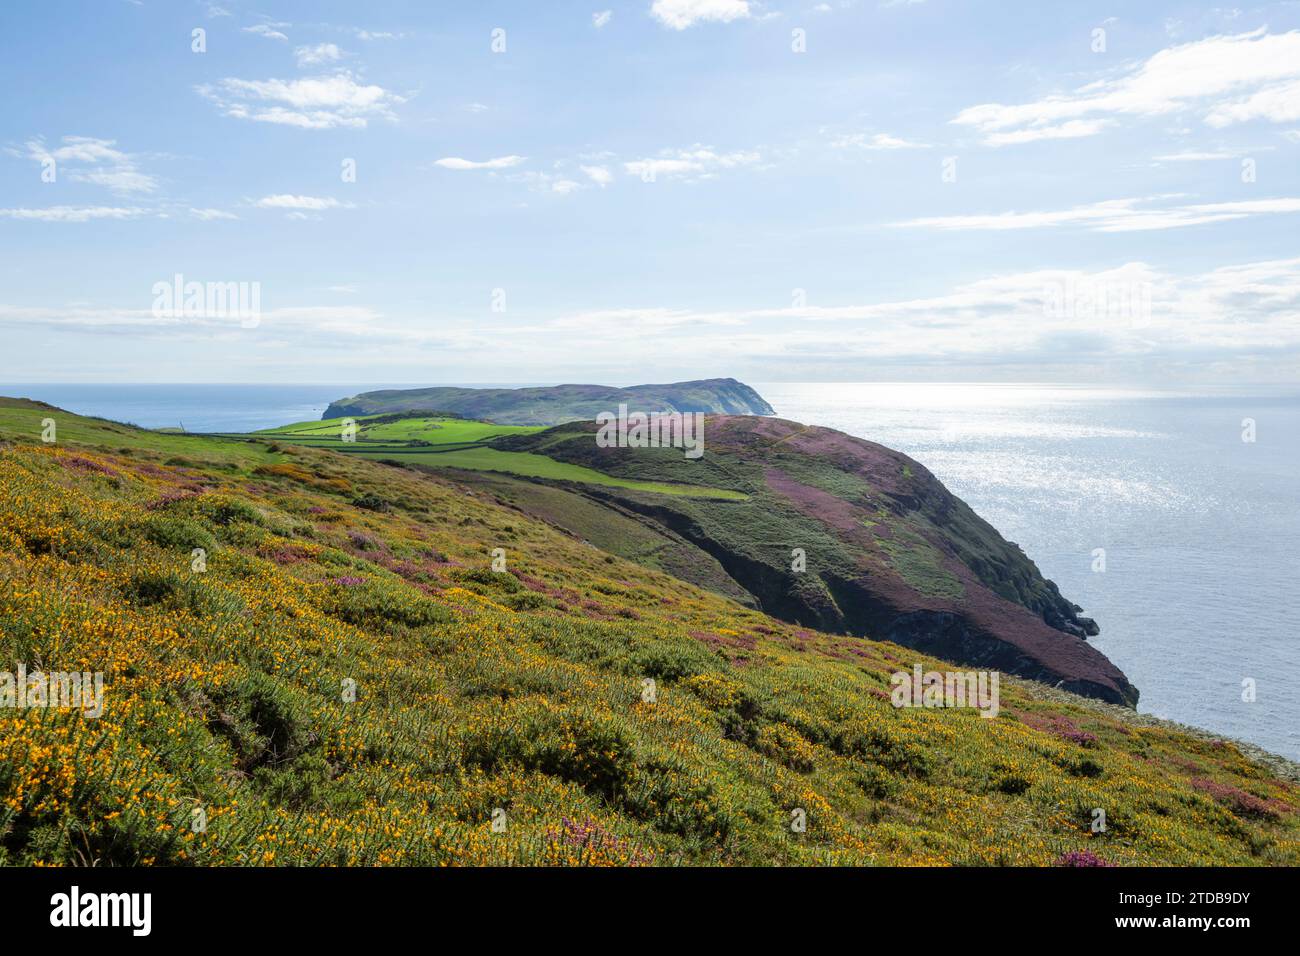 View towards the Calf of Man. Isle of Man, UK. Stock Photo